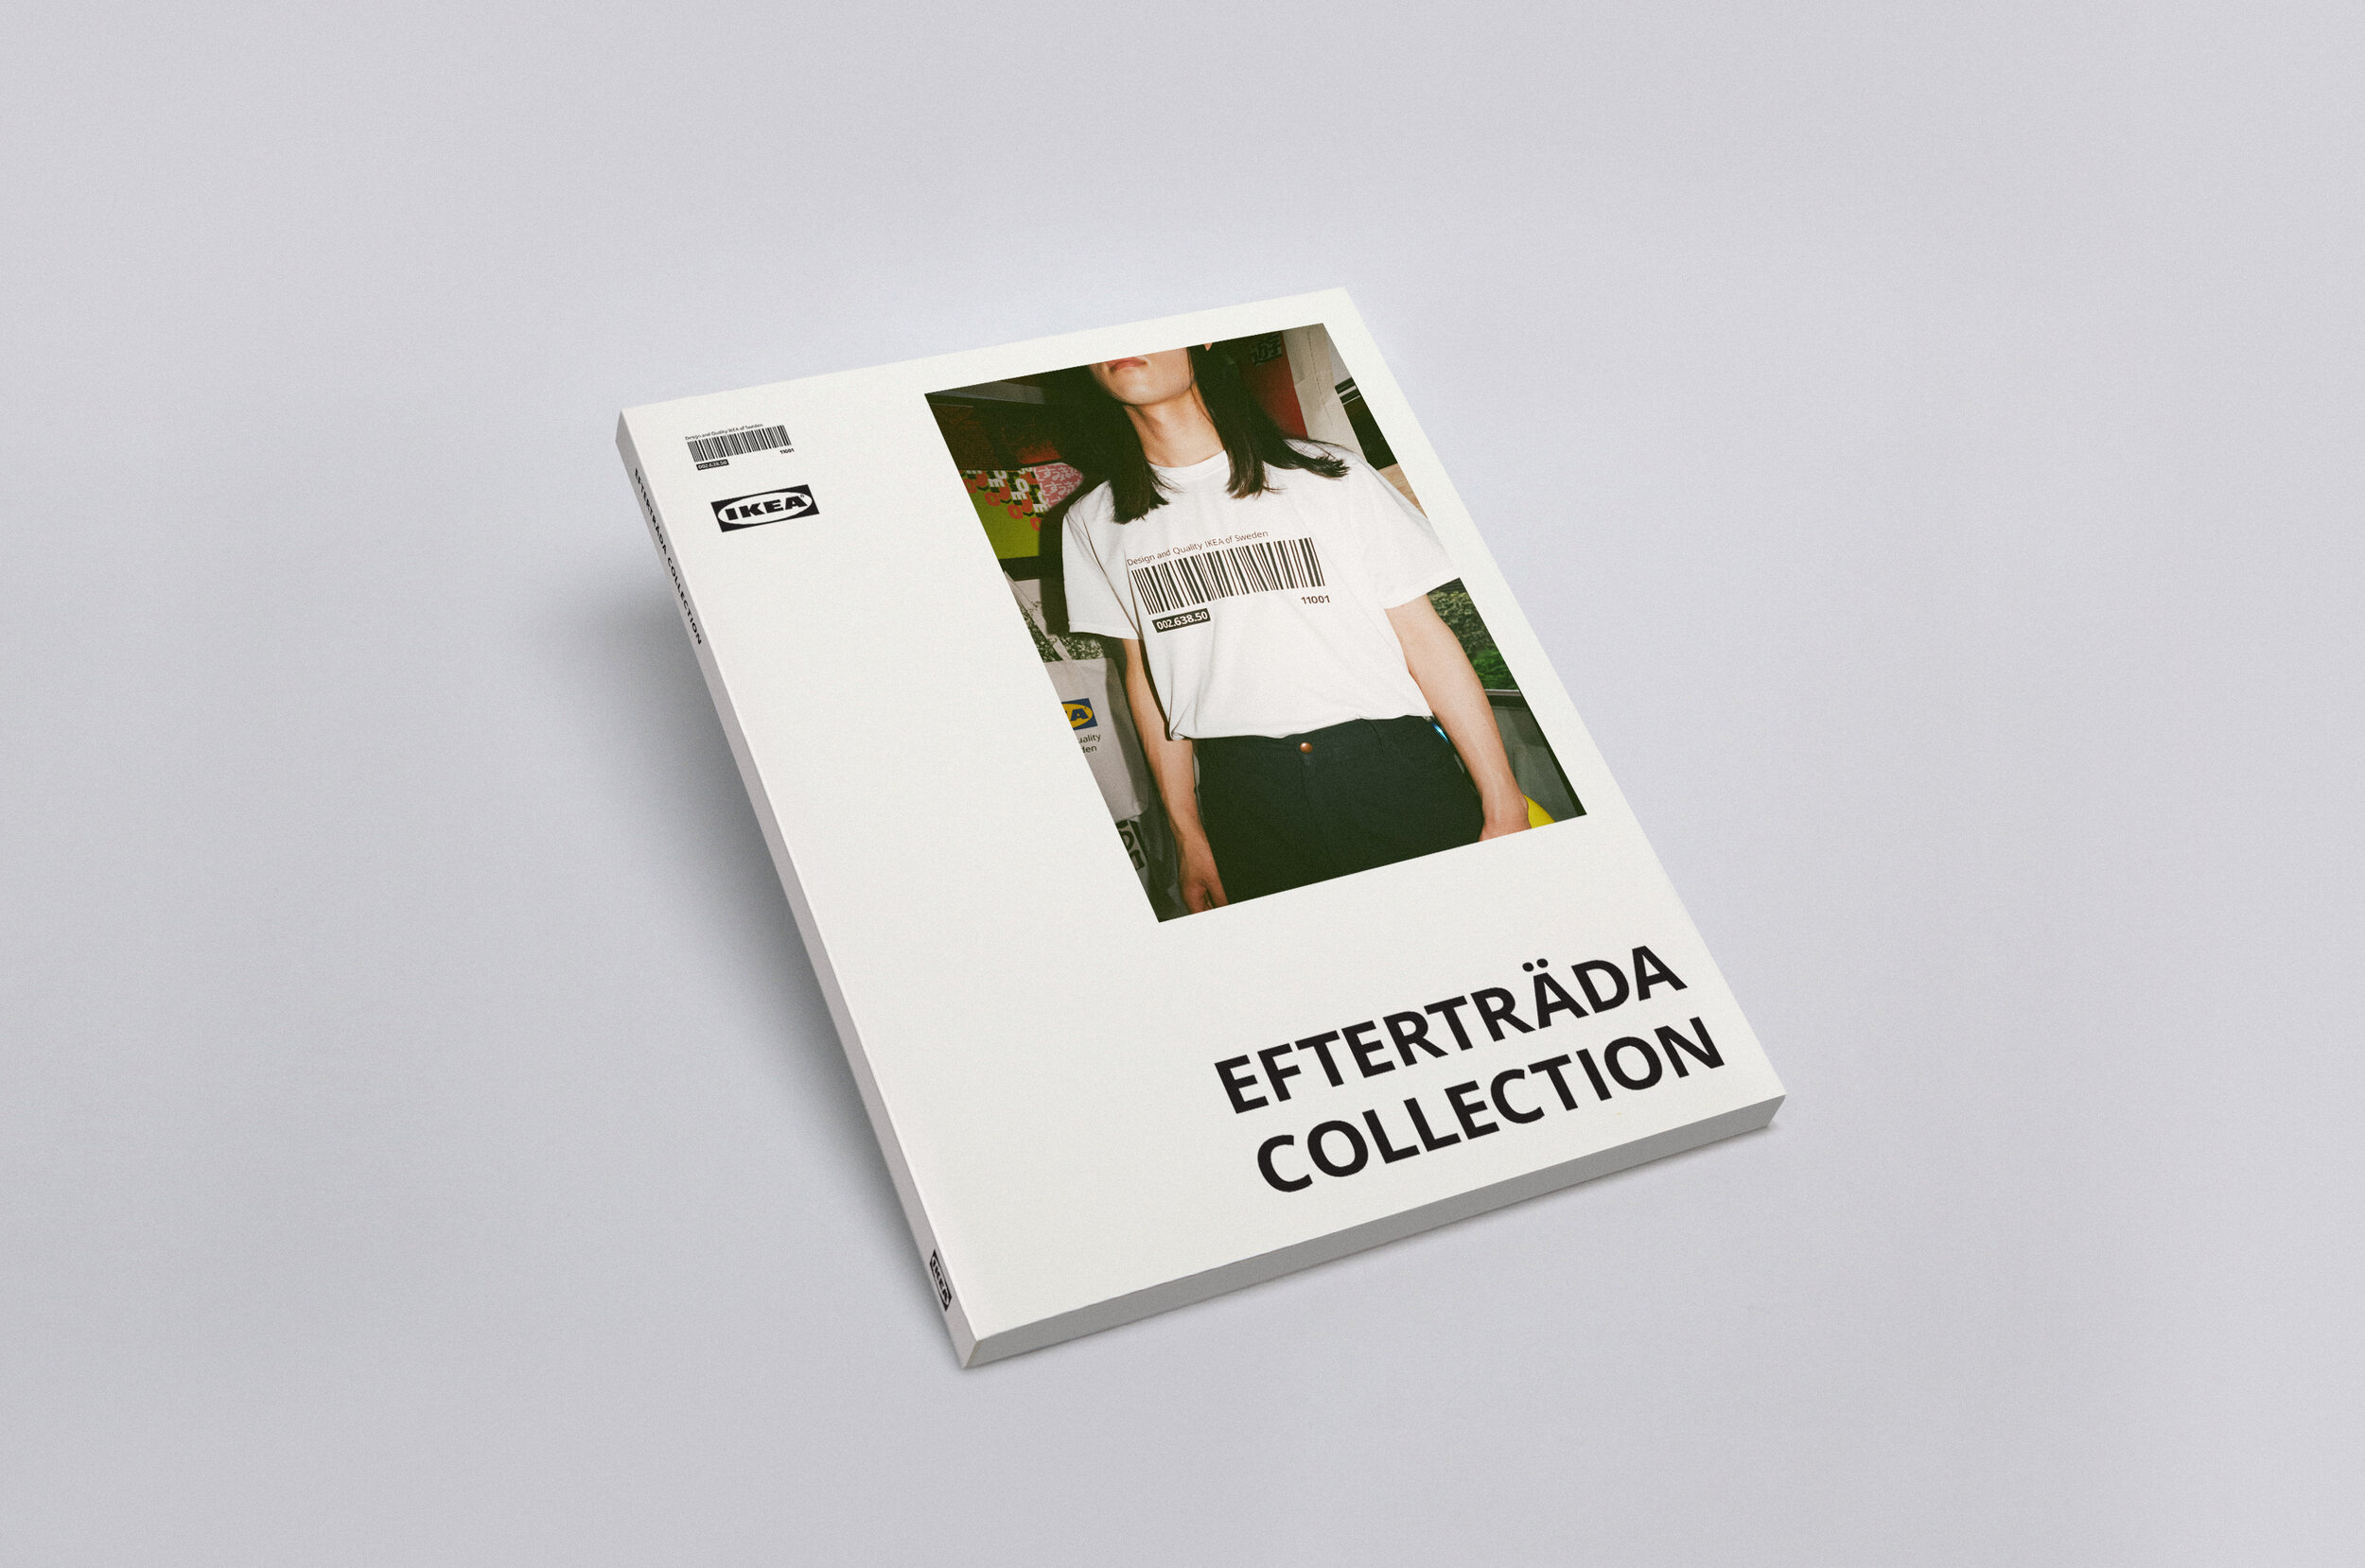 IKEA_Eftertrada_Lookbook_Front_Final.jpg